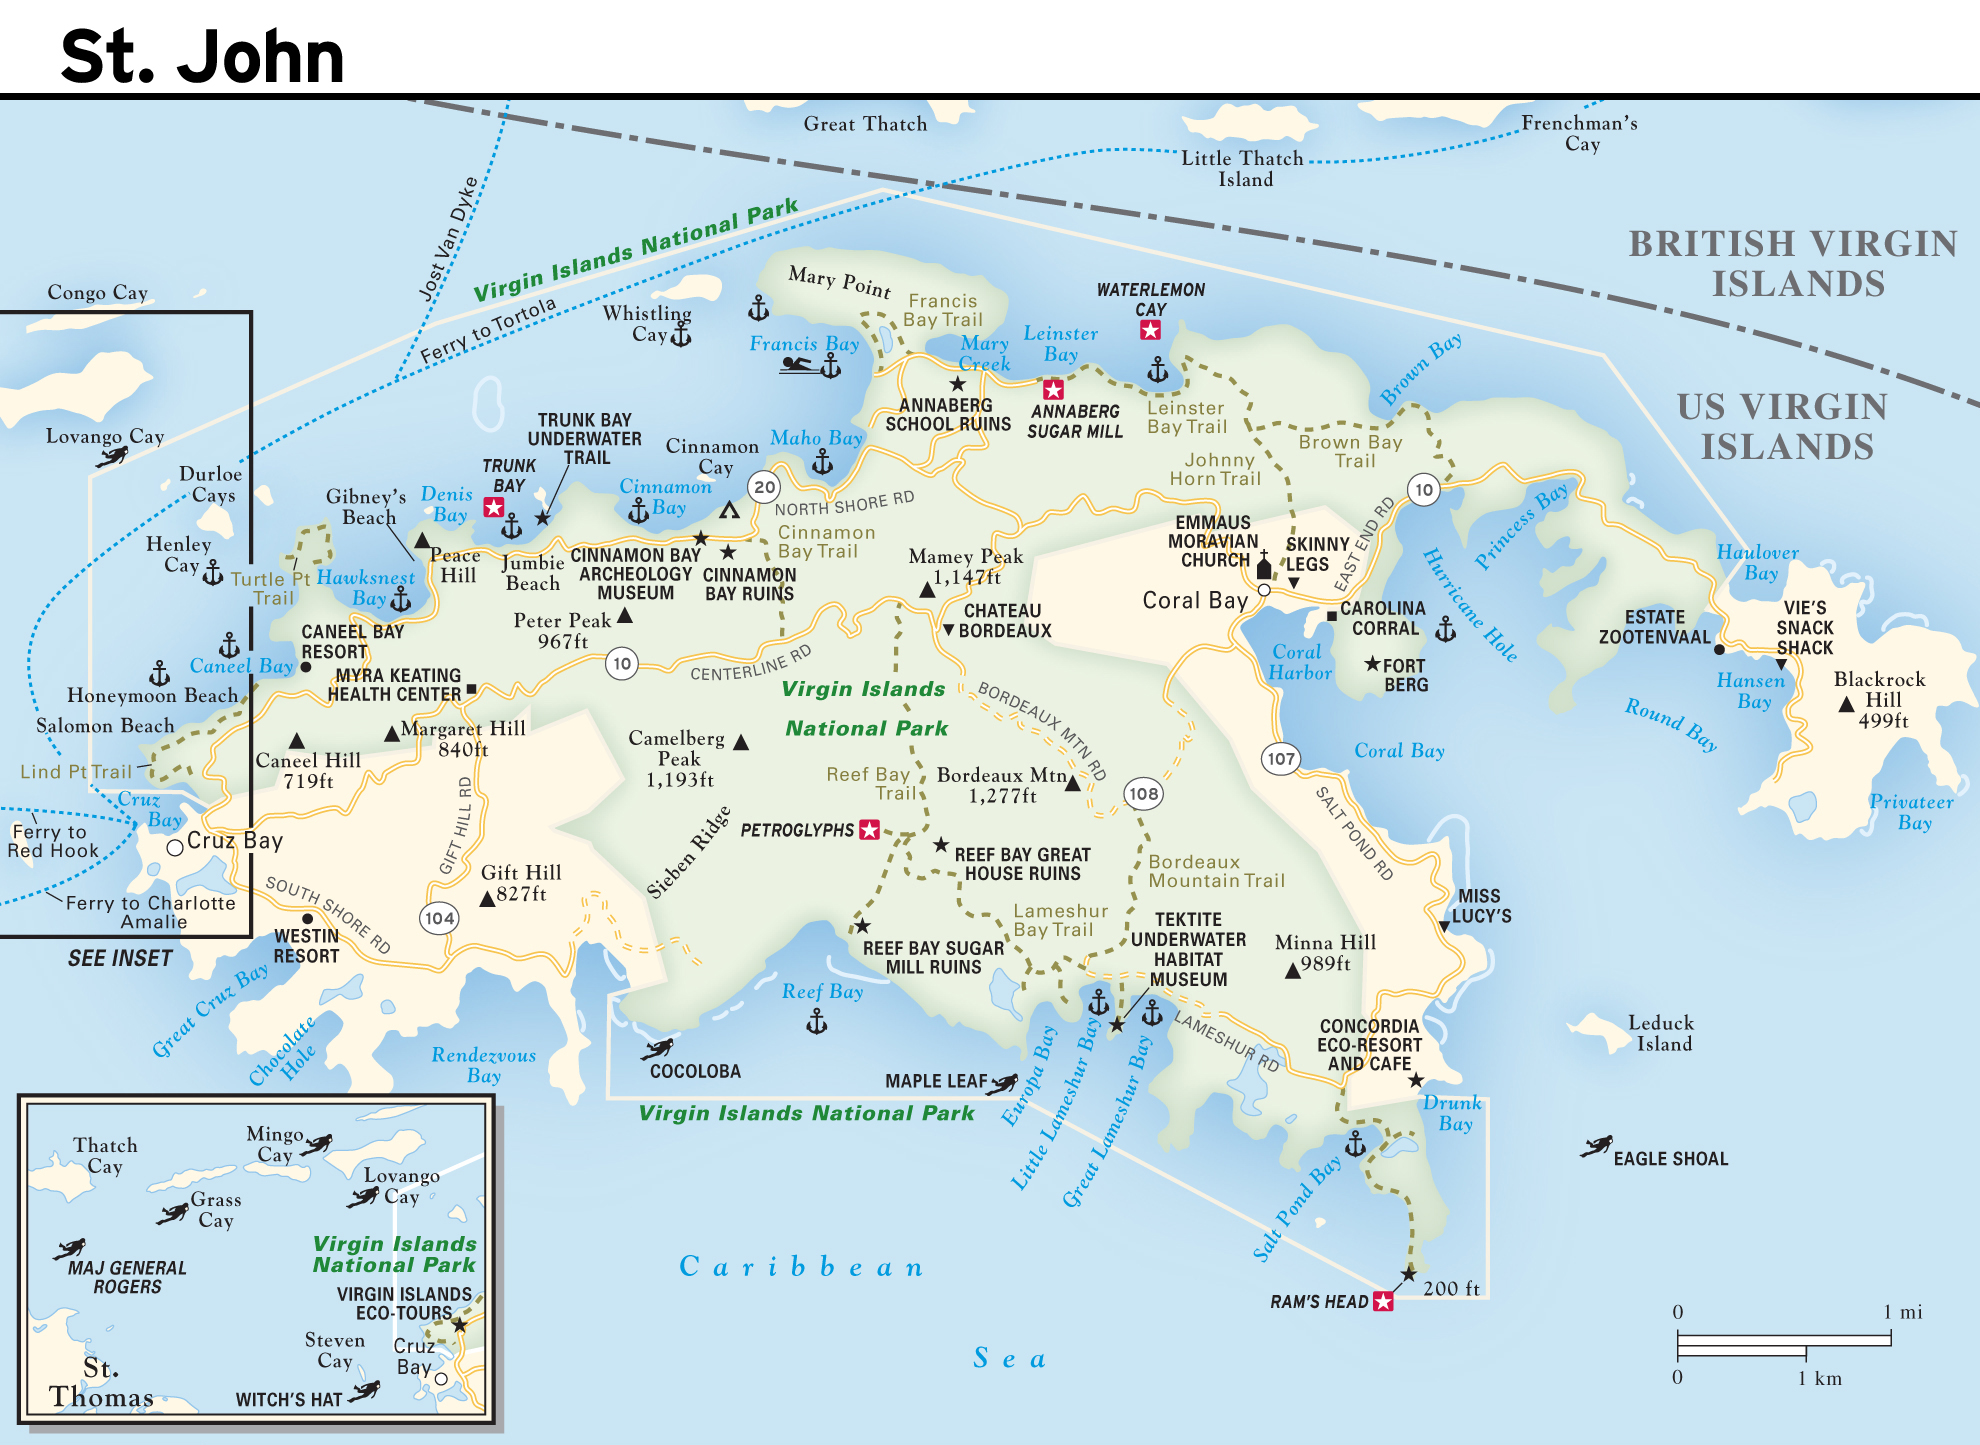 map of st john usvi Large Road Map Of St John Island Us Virgin Islands With Other Marks Us Virgin Islands United States Virgin Islands Usvi North America Mapsland Maps Of The World map of st john usvi